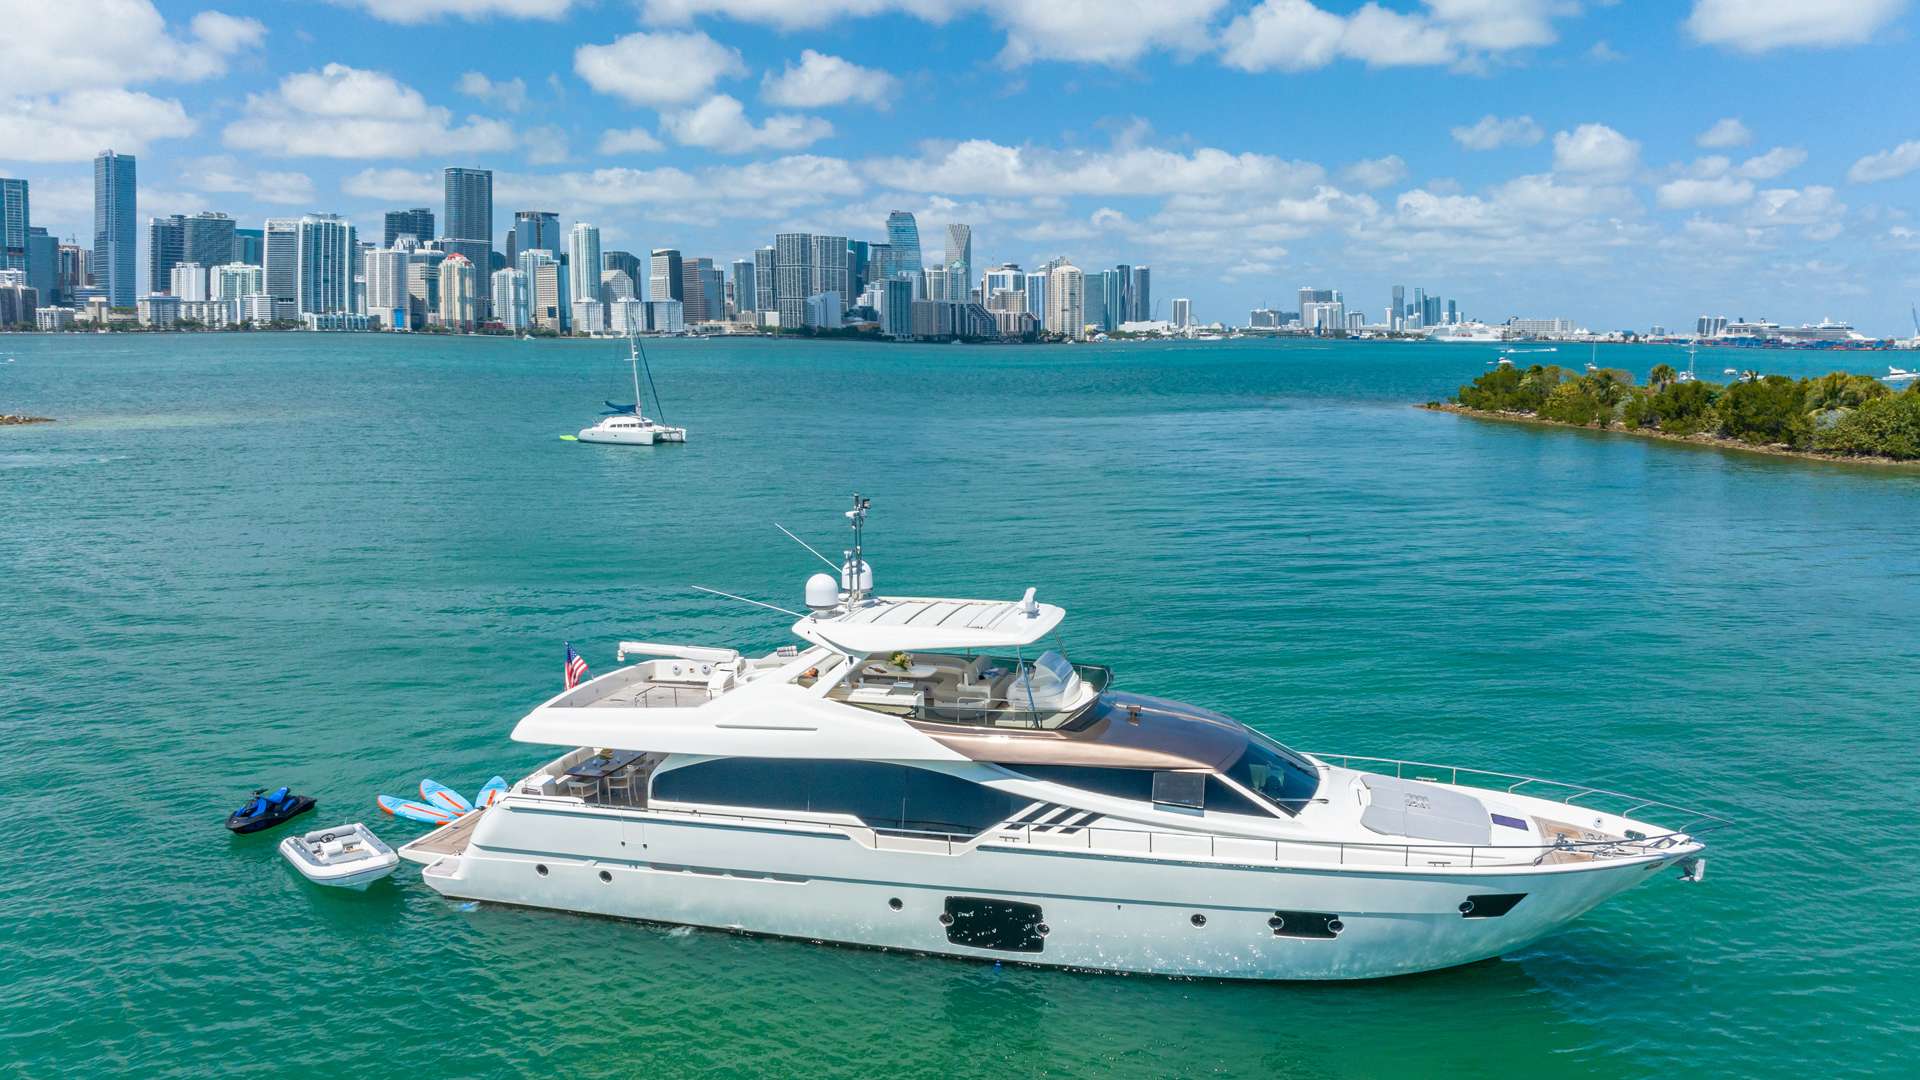 HOYA SAXA - Yacht Charter New England & Boat hire in US East Coast & Bahamas 2